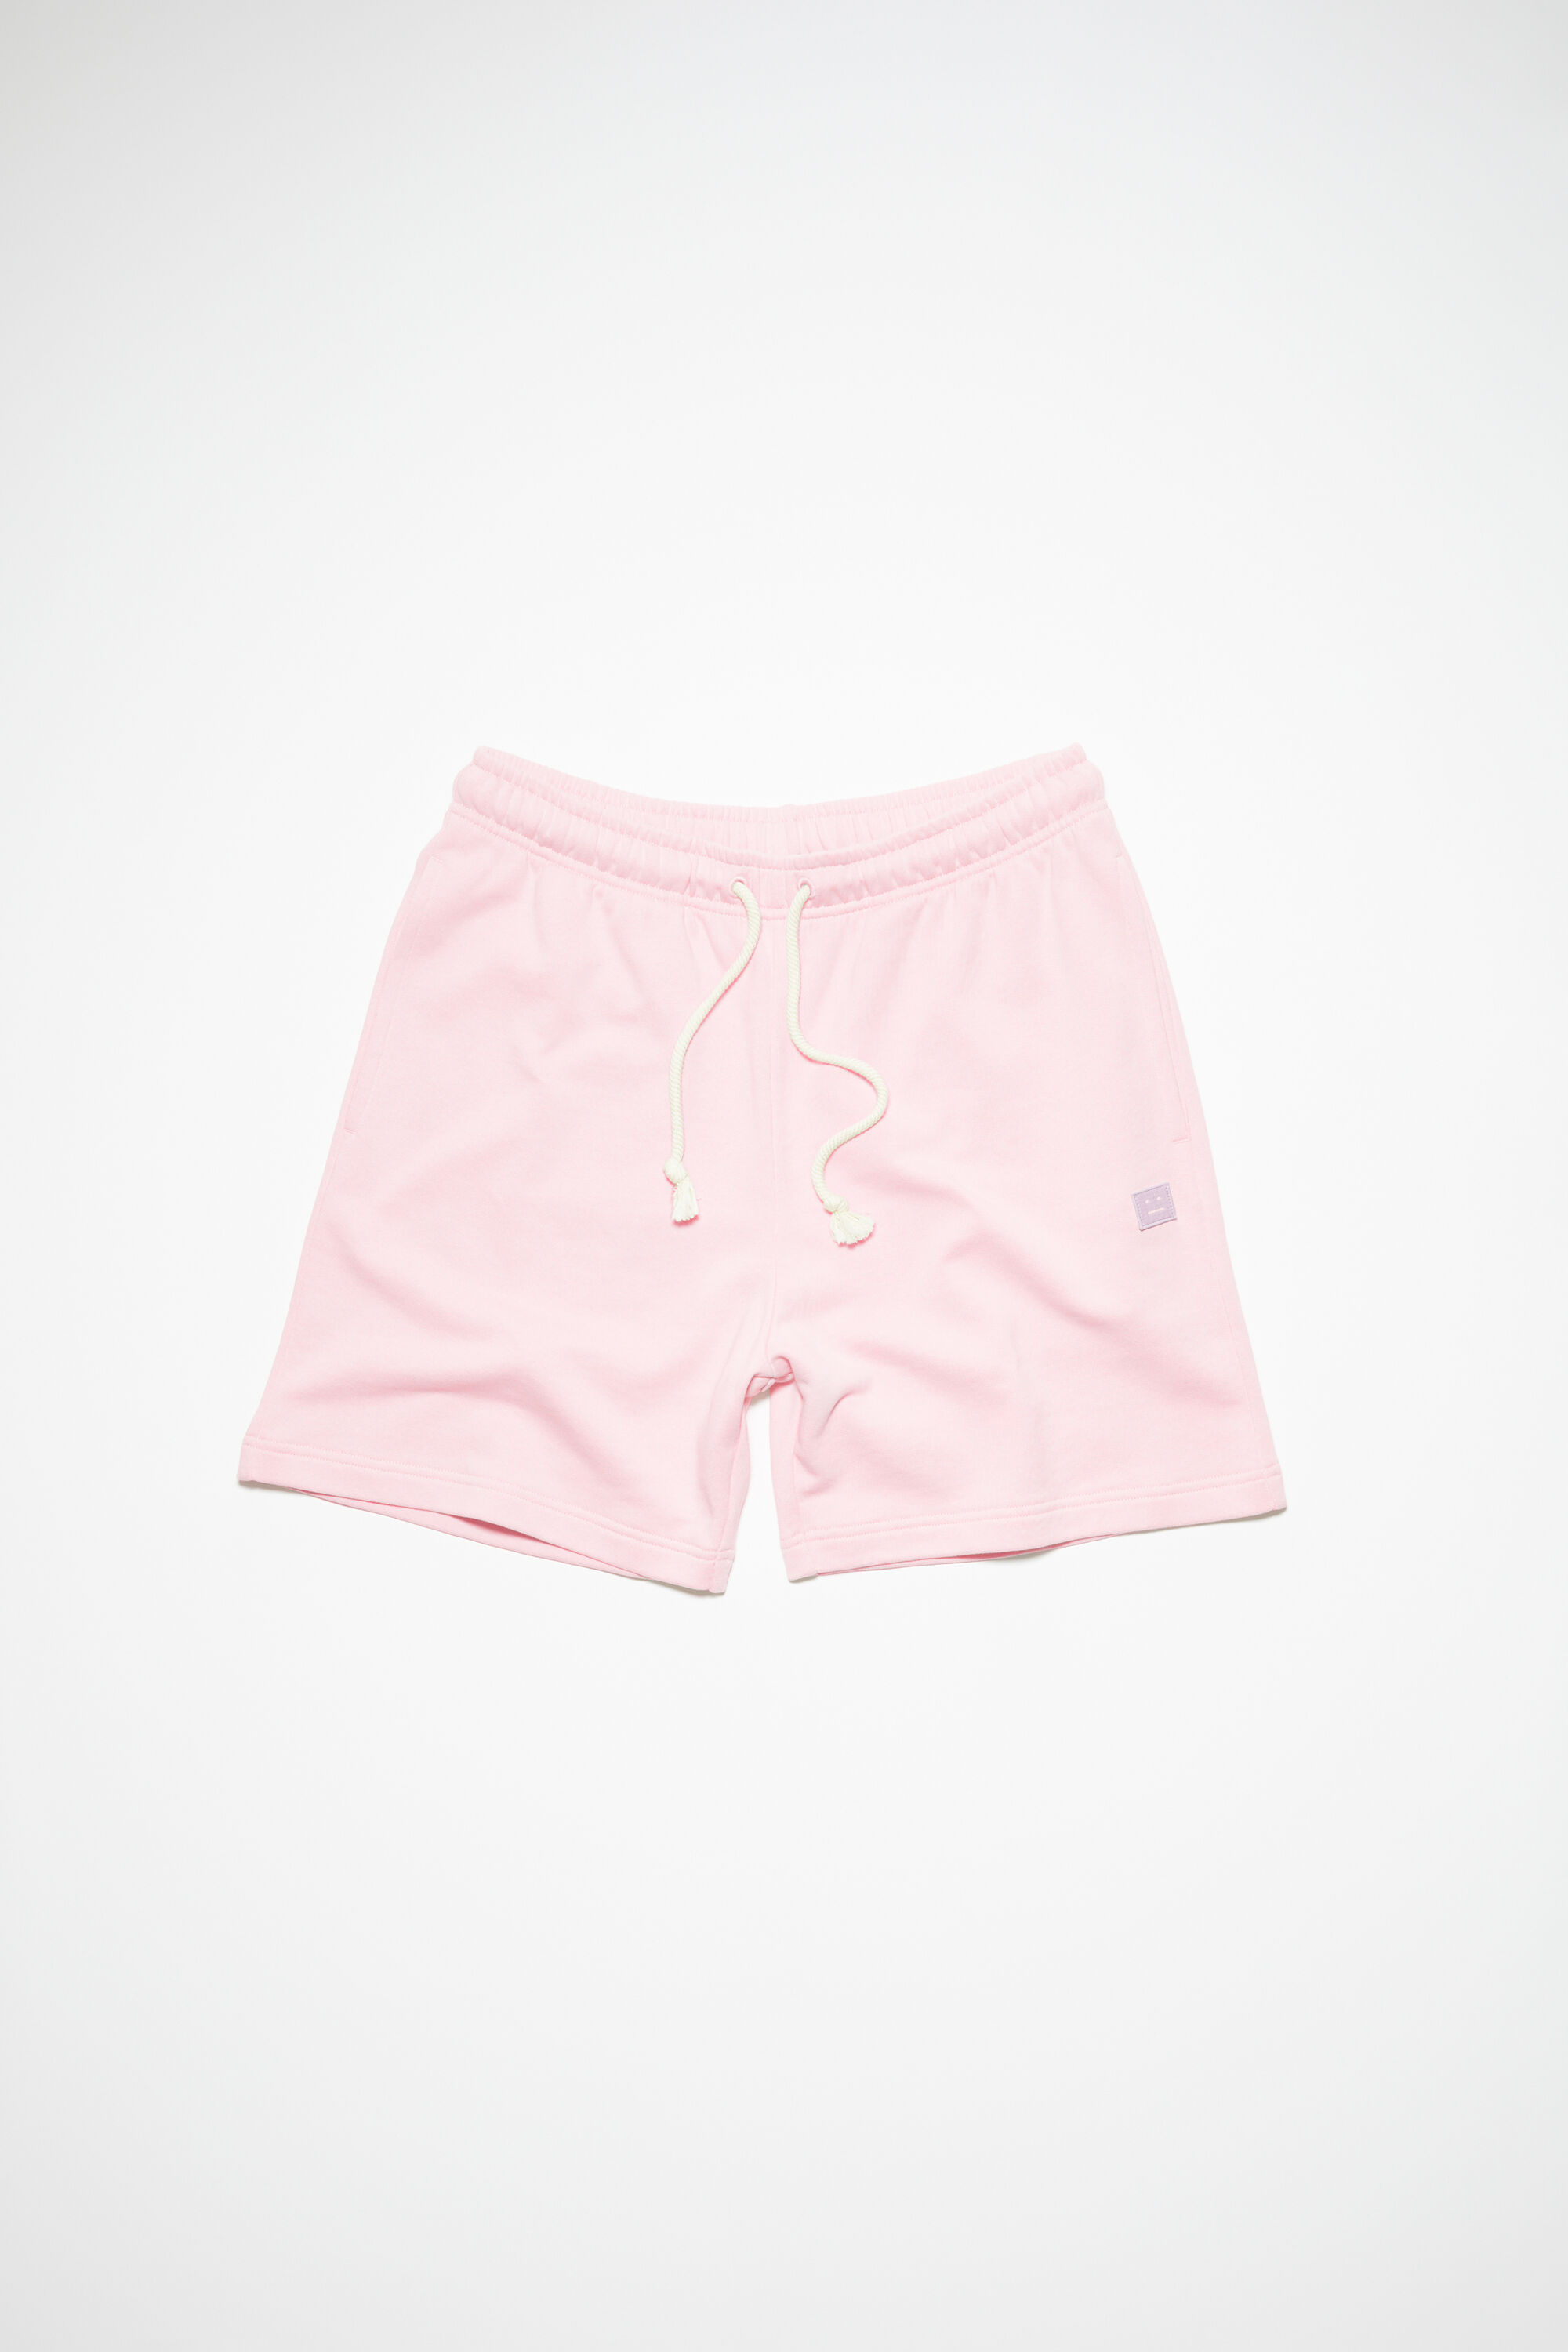 Acne Studios - Cotton sweat shorts - Light pink